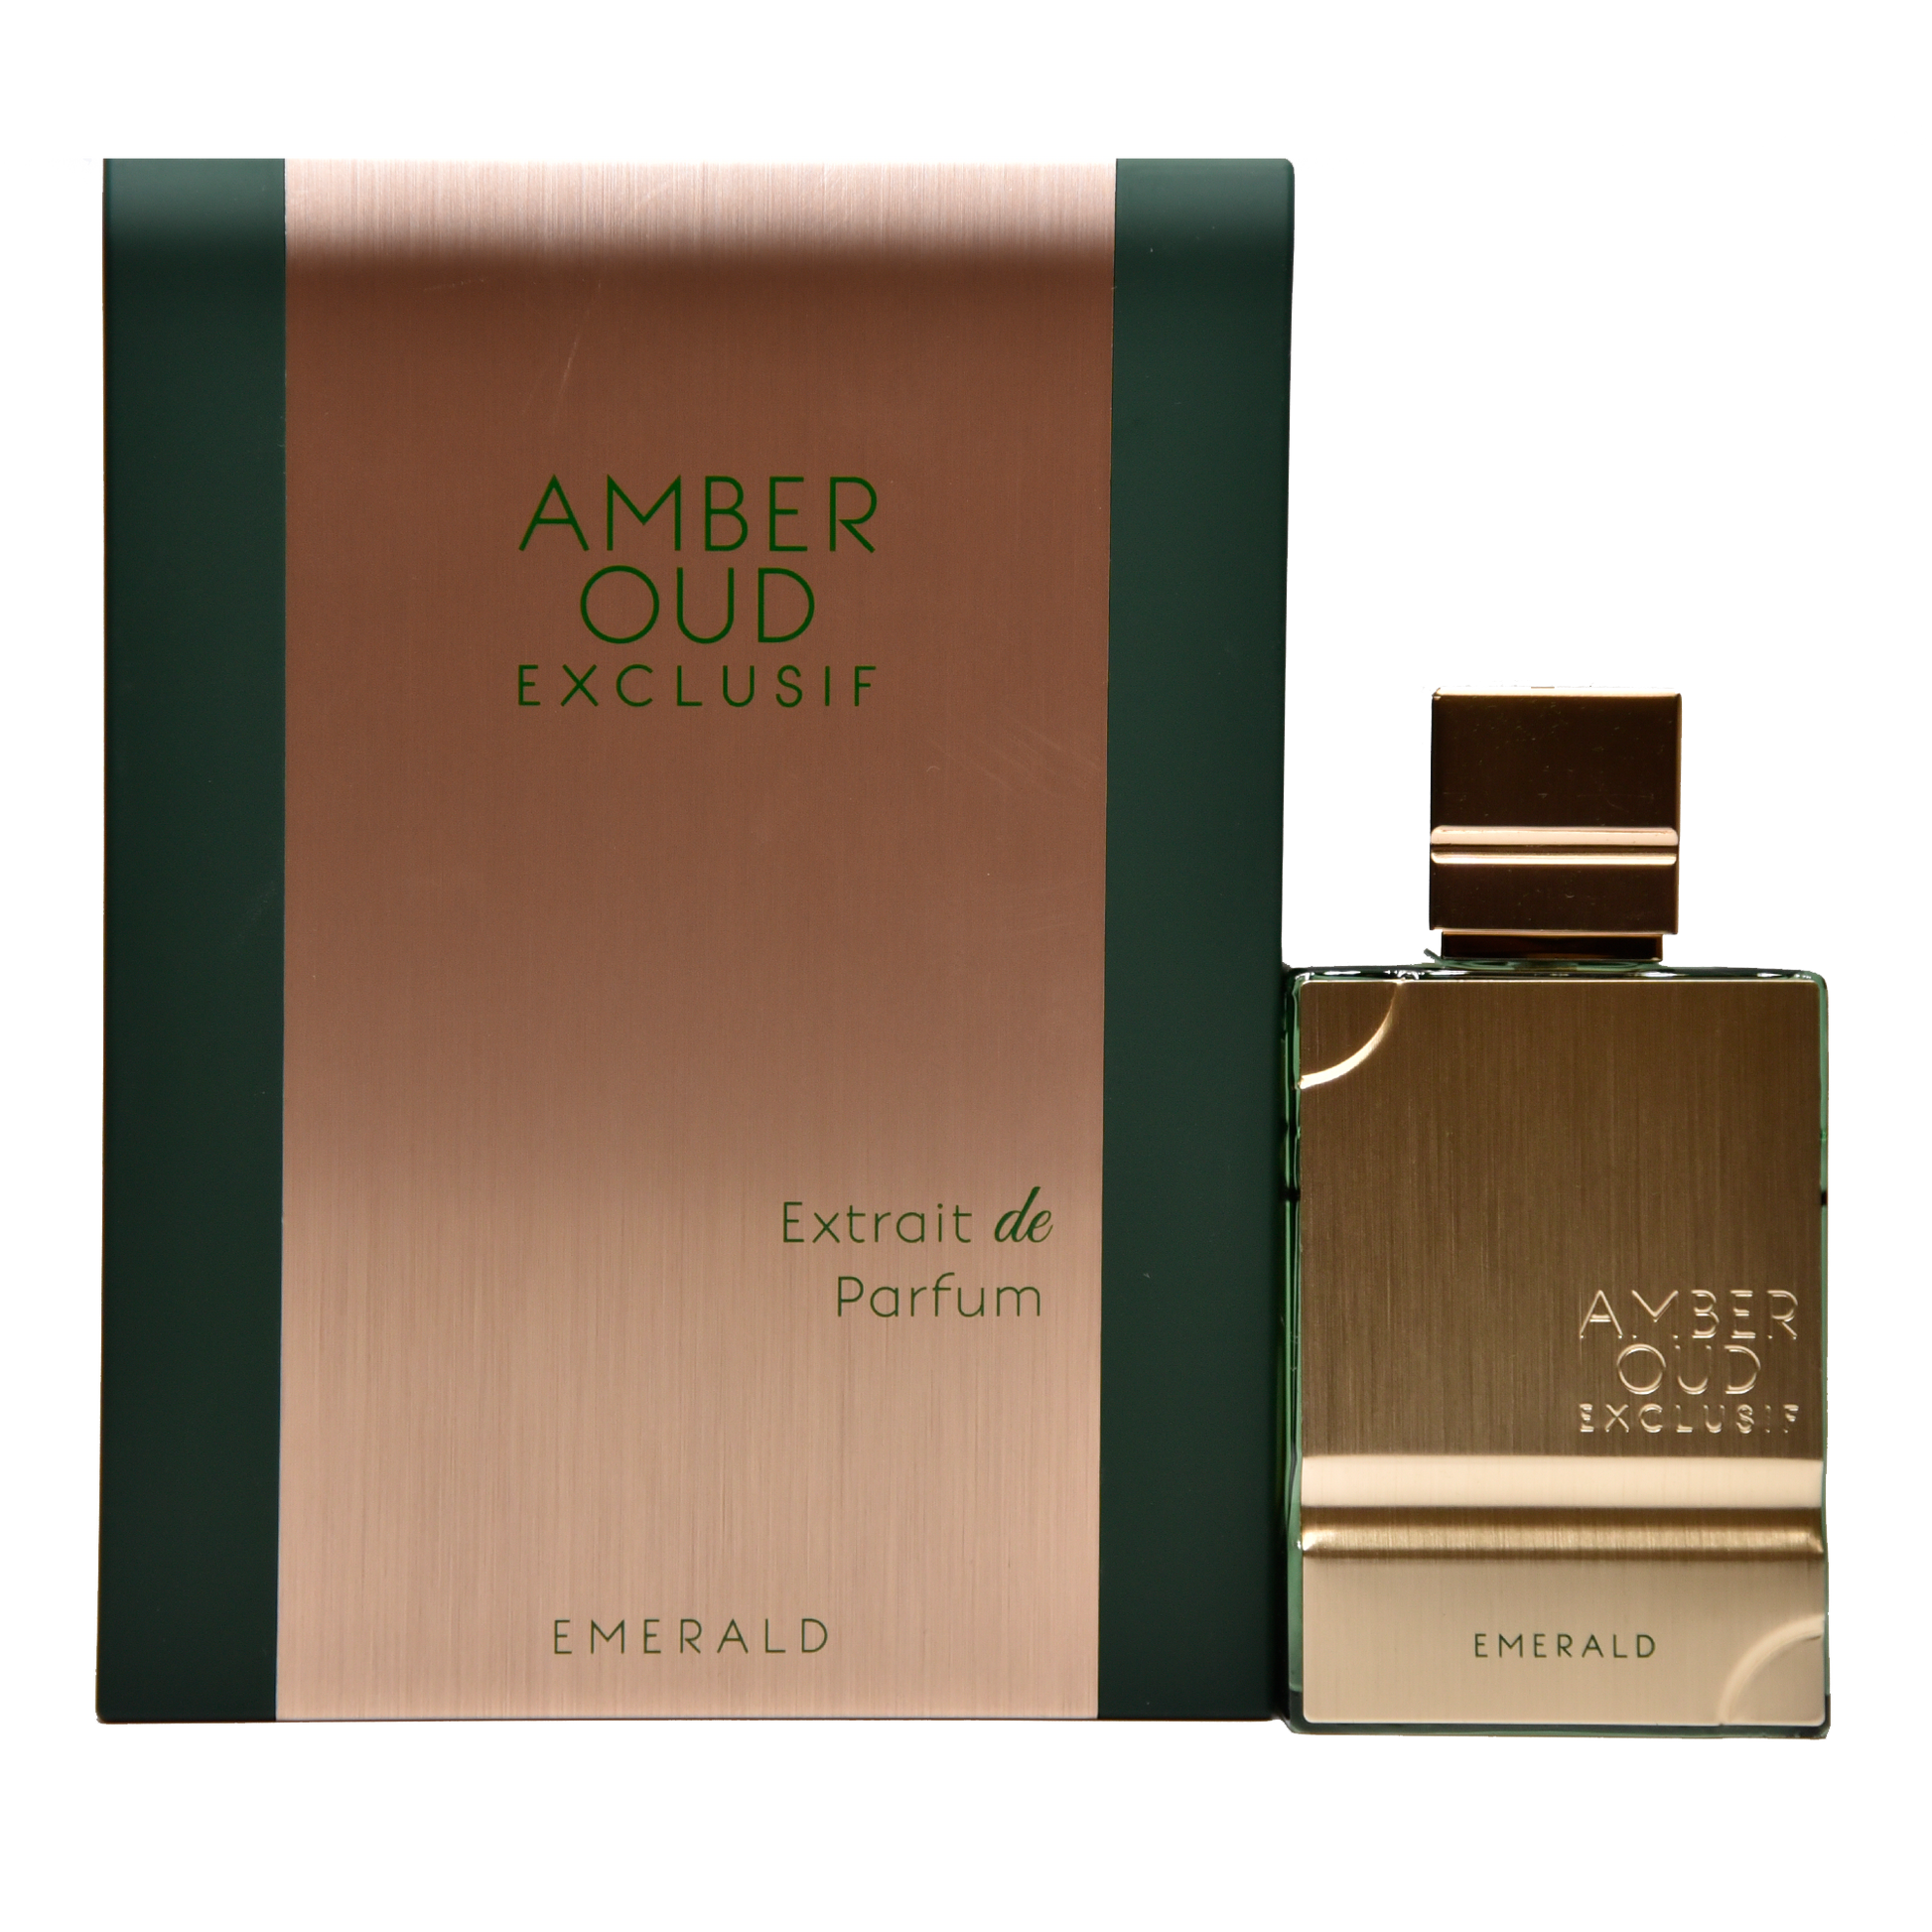 Amber Oud Exclusive Emerald - Al Haramain - 2.0 oz - Eau de Parfum - Fragrance - 3760327810023 - Fragrance